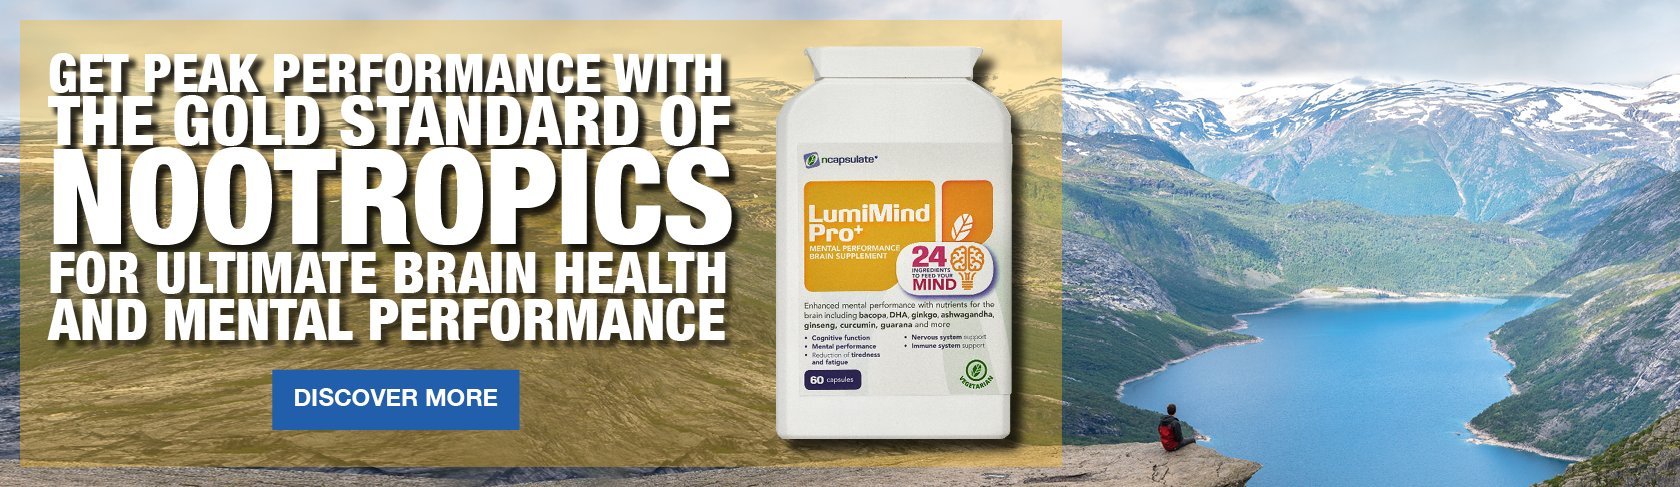 ncapsulate® Premium Health Supplements - LumiMind Pro+ Brain Supplement Nootropics Banner